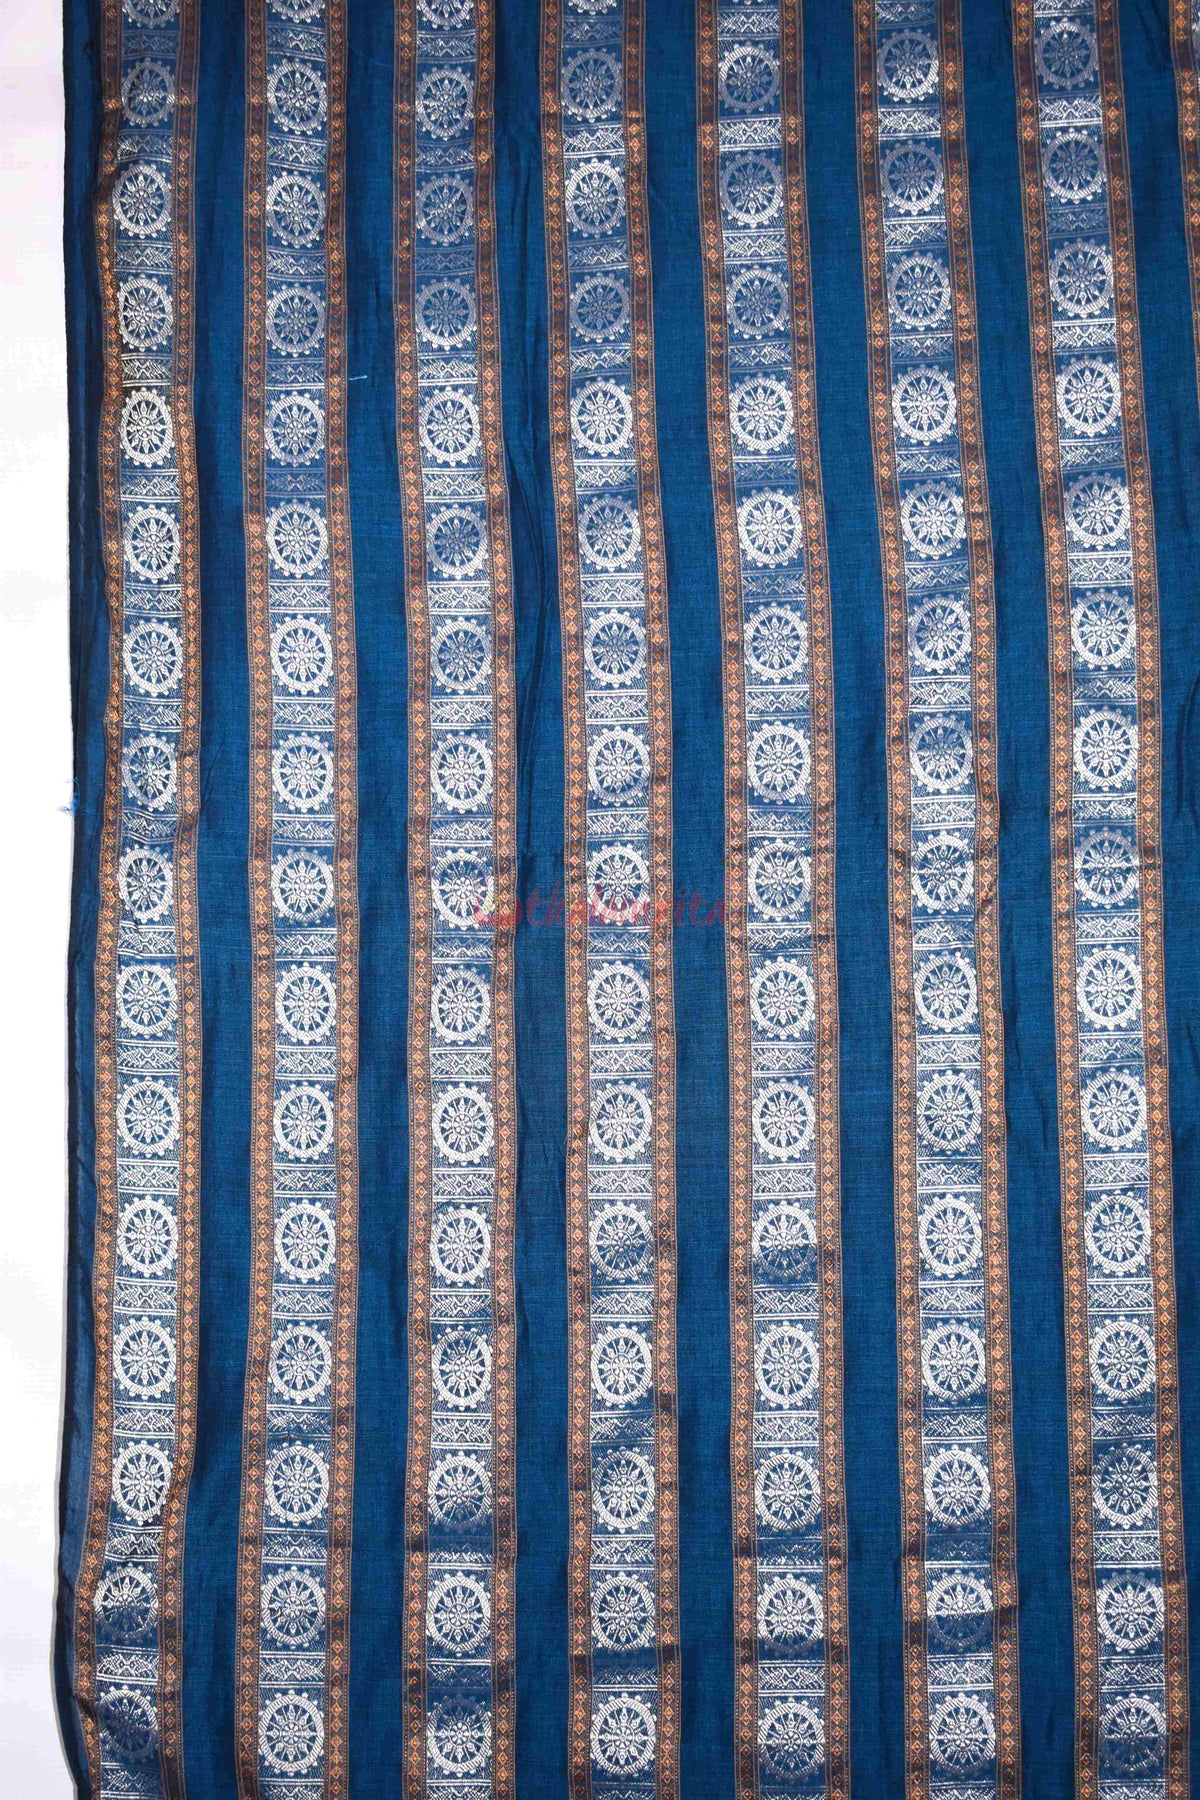 Blue Golden Konark Wheels (Fabric)